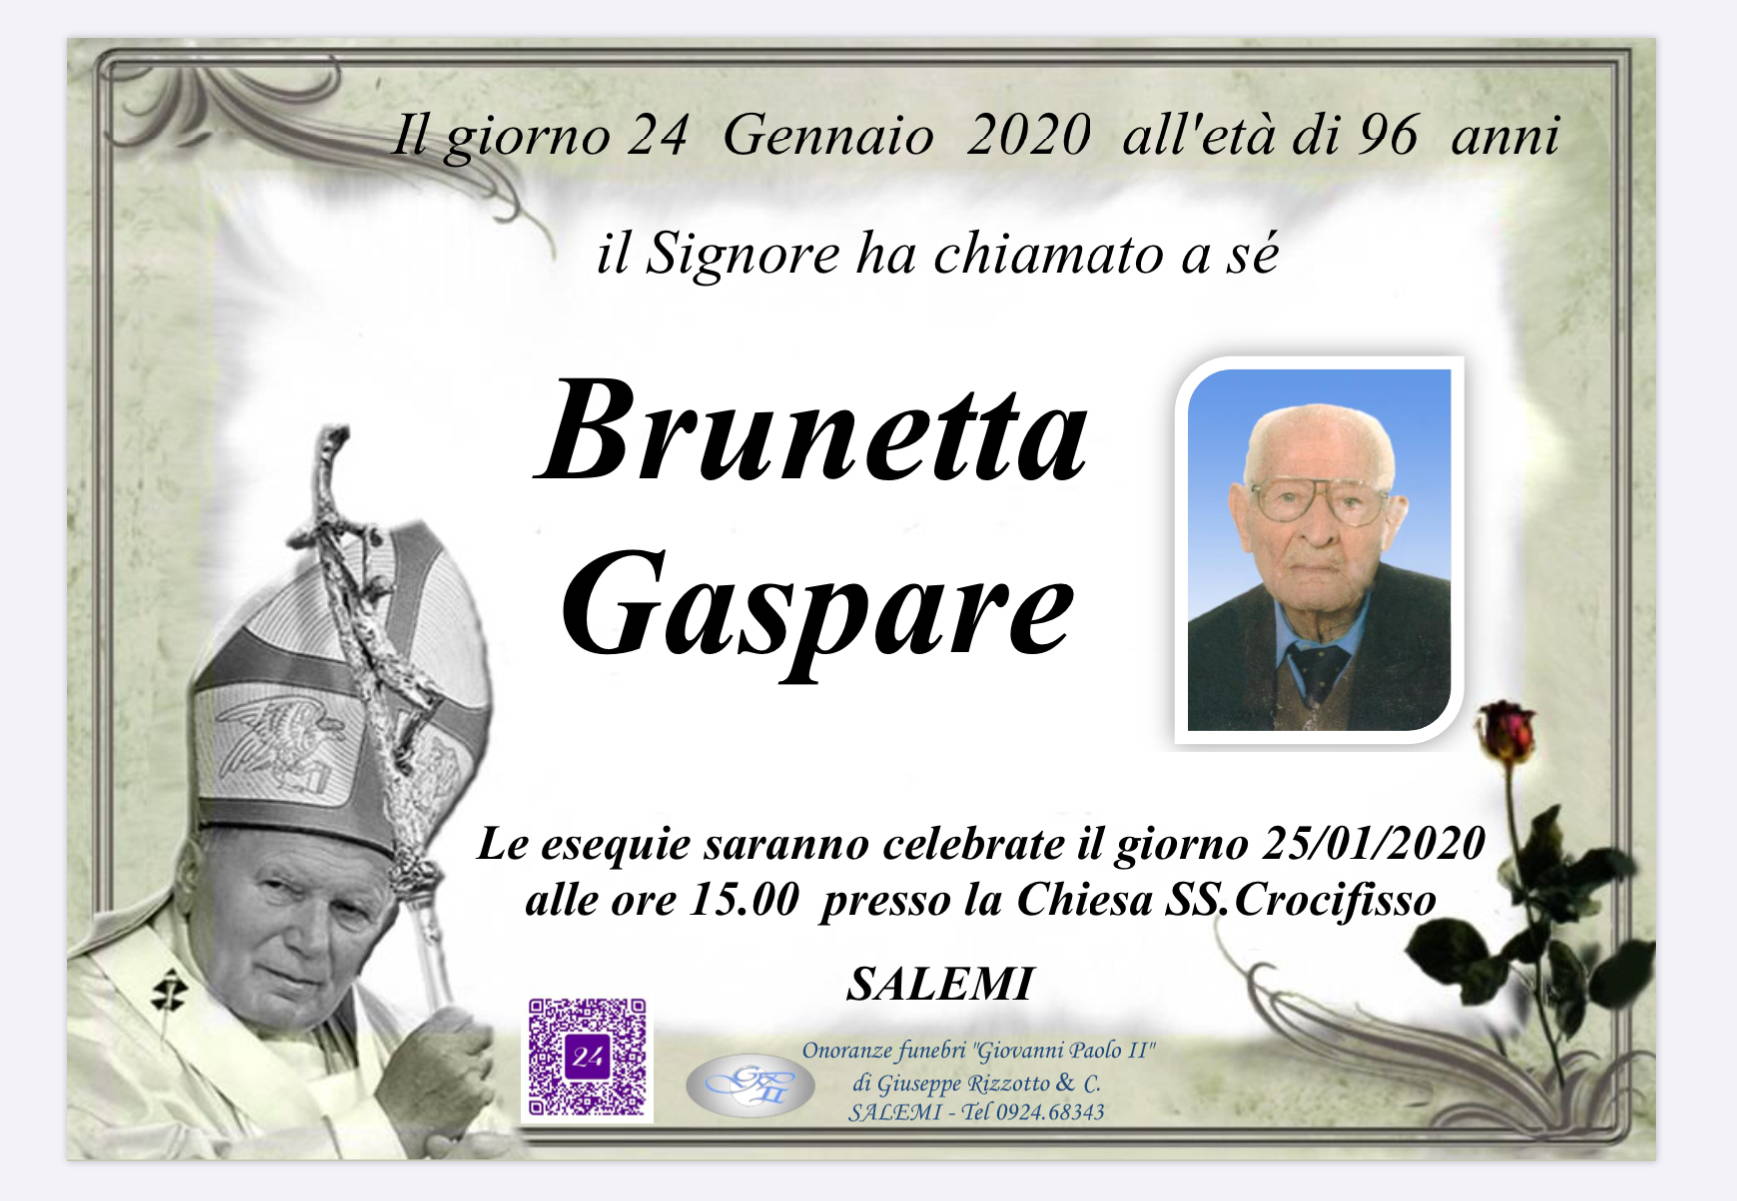 Gaspare Brunetta